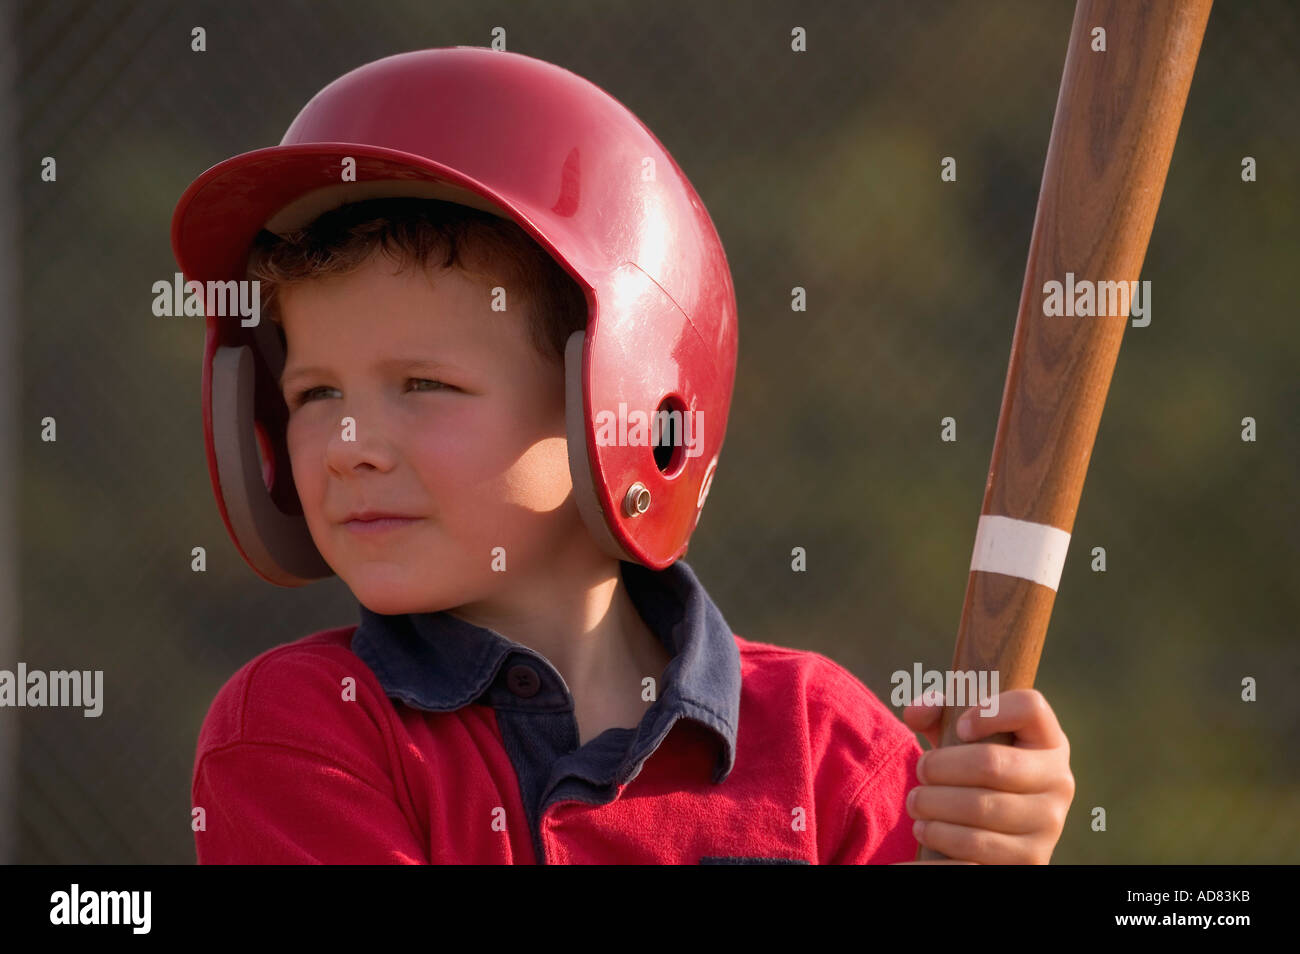 Child with baseball bat Stock Photo